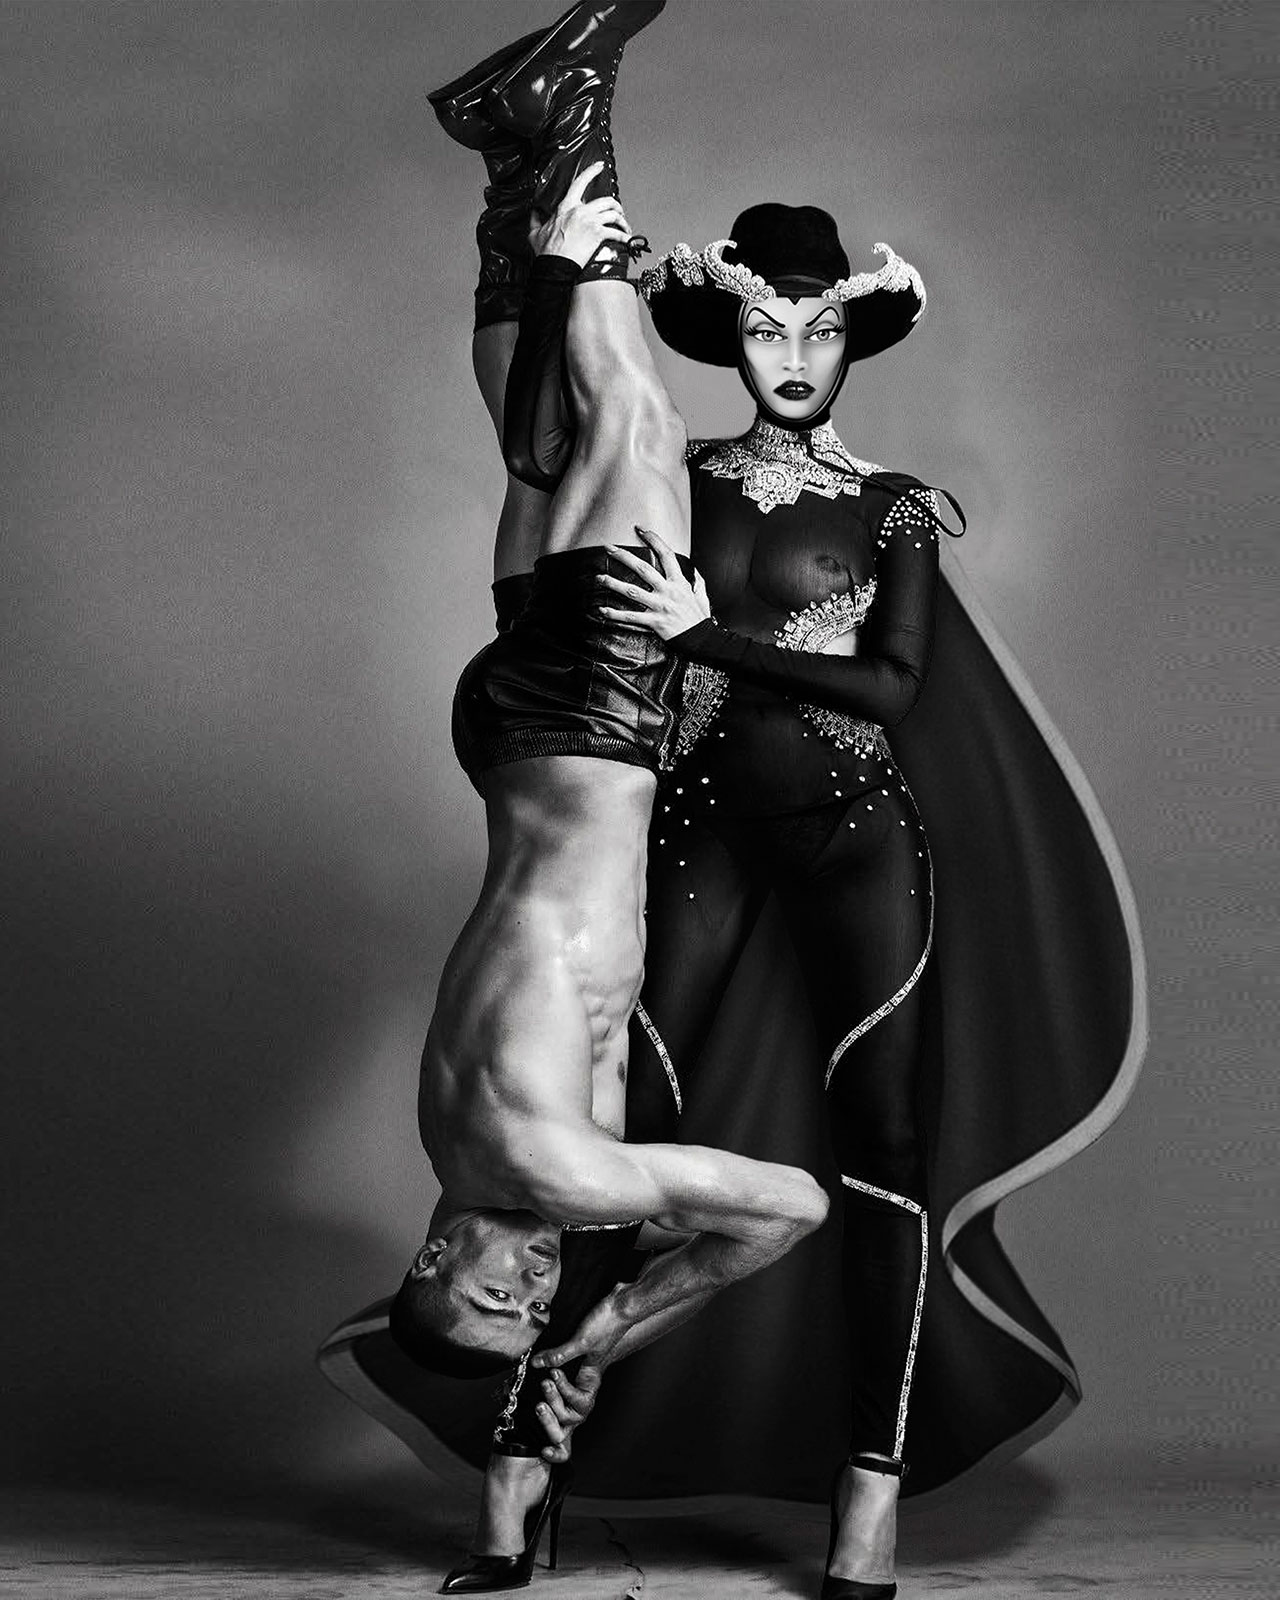 Lara Stone 饰演 Philipp Plein 中的邪恶女王，出自 2016 年 8 月版《Vogue Italia》的封面。 由 Steven Klein 拍摄，Patti Wilson 造型，Gregory Masouras 照片编辑。